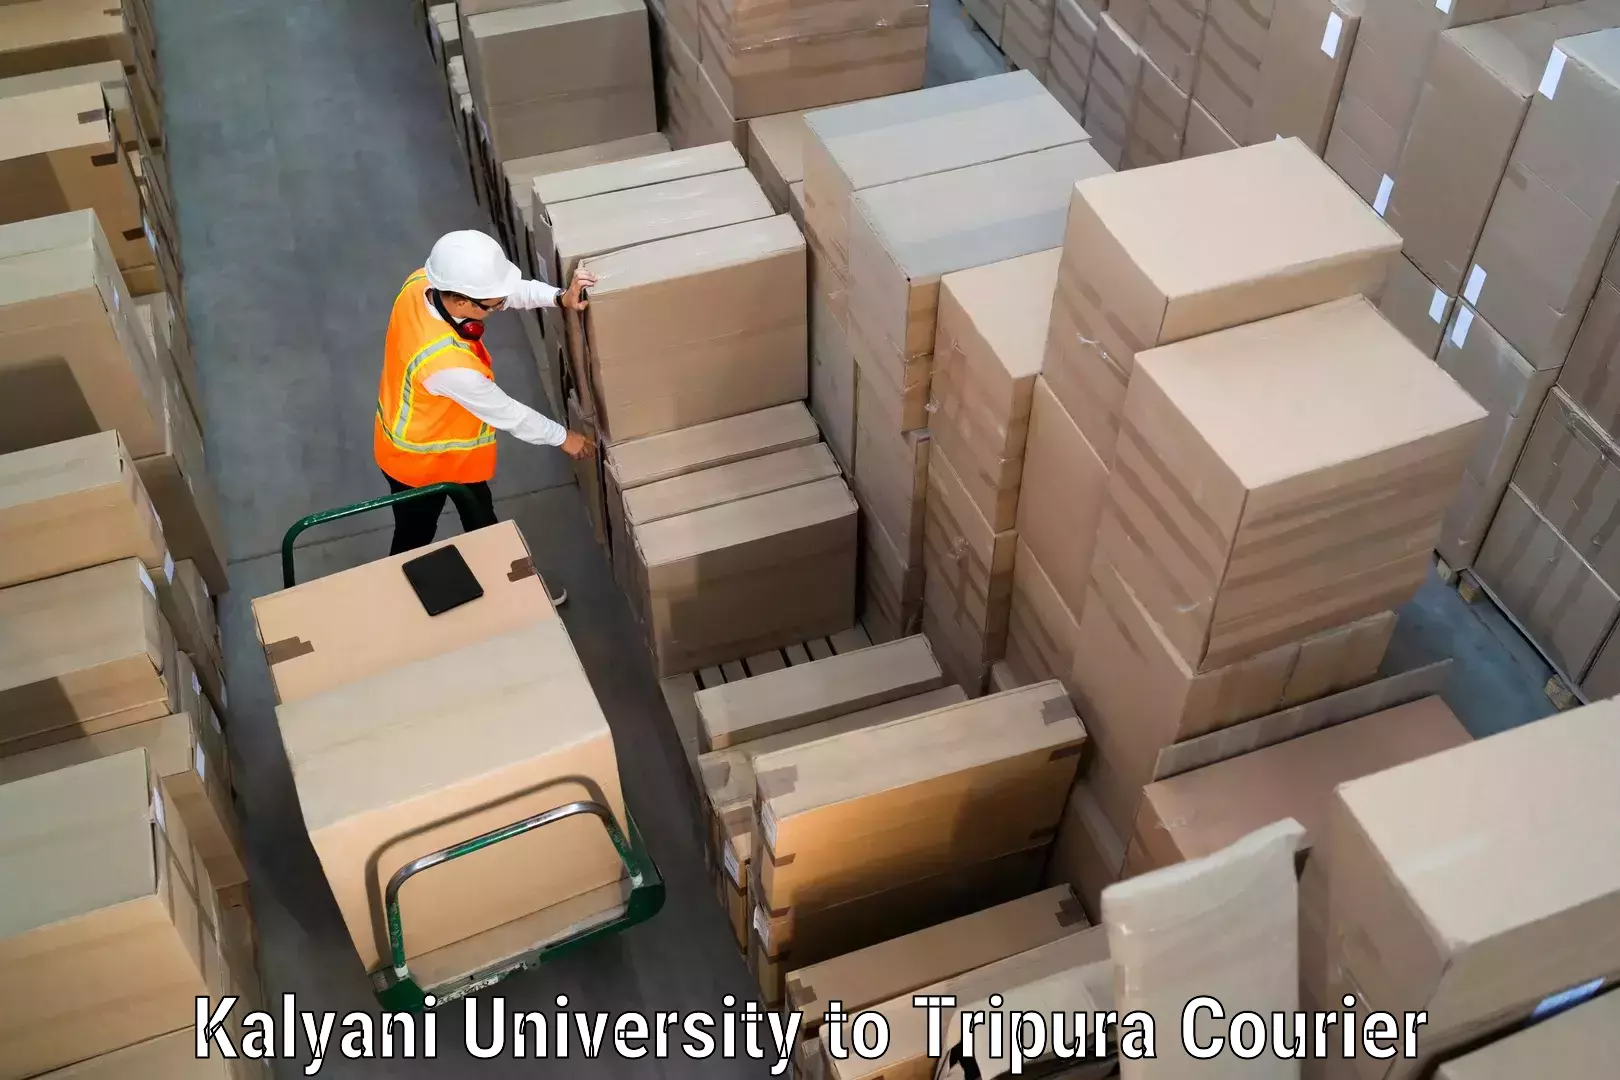 Easy access courier services Kalyani University to Tripura